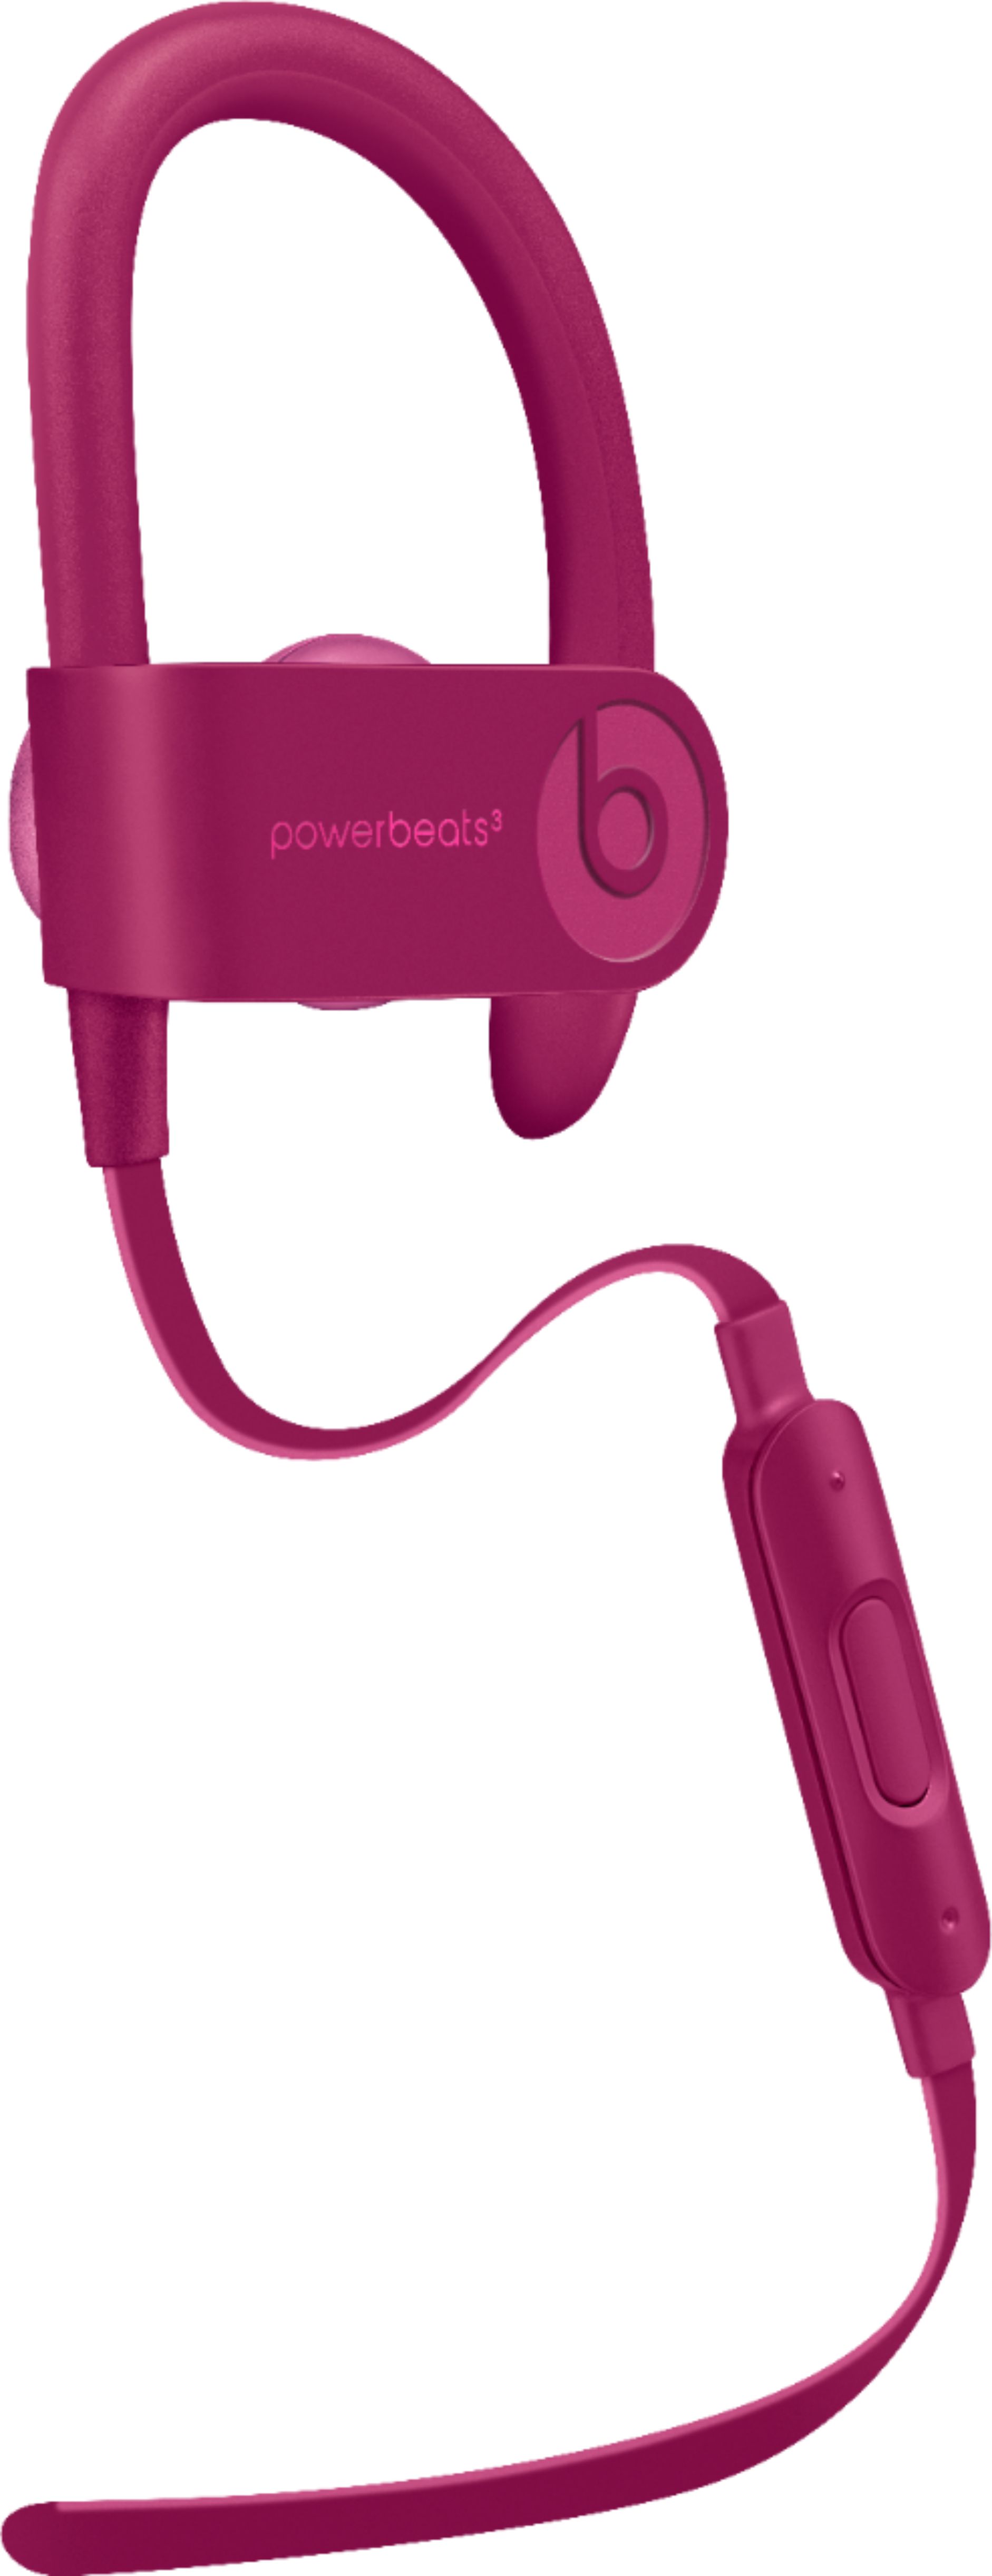 powerbeats3 wireless brick red